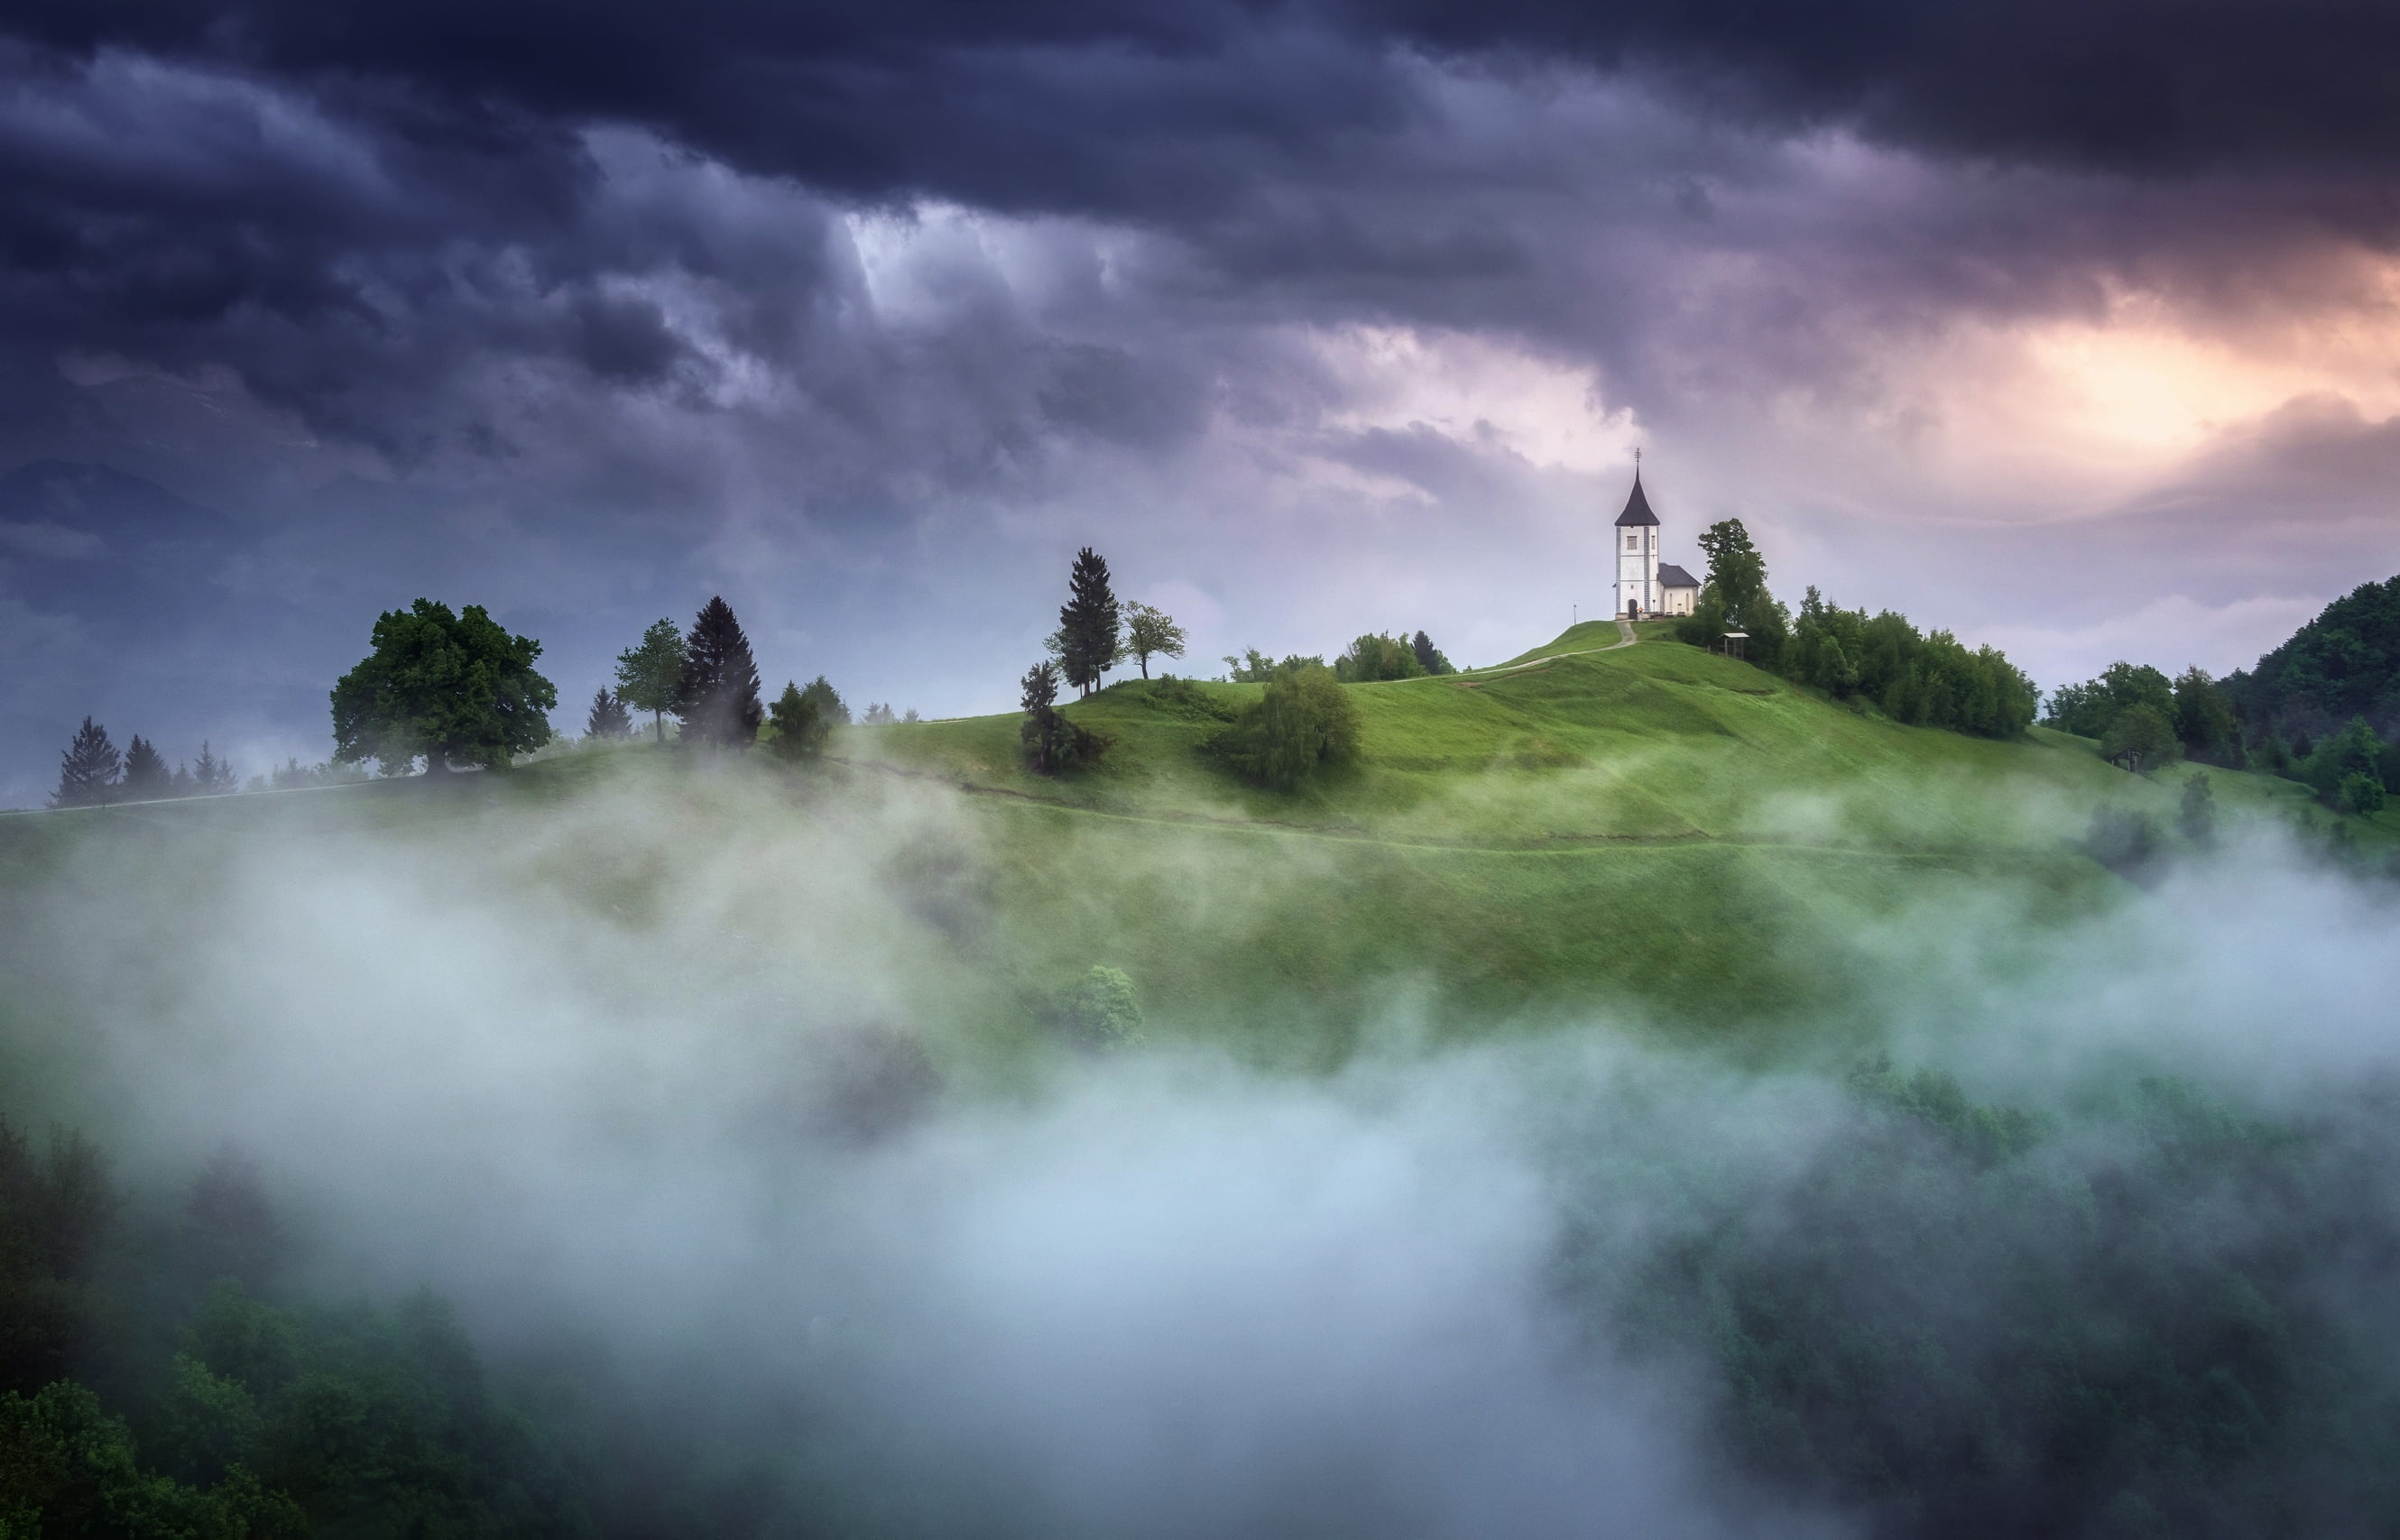 nature, landscape, sky, Slovenia, cloud - sky, plant, scenics - nature